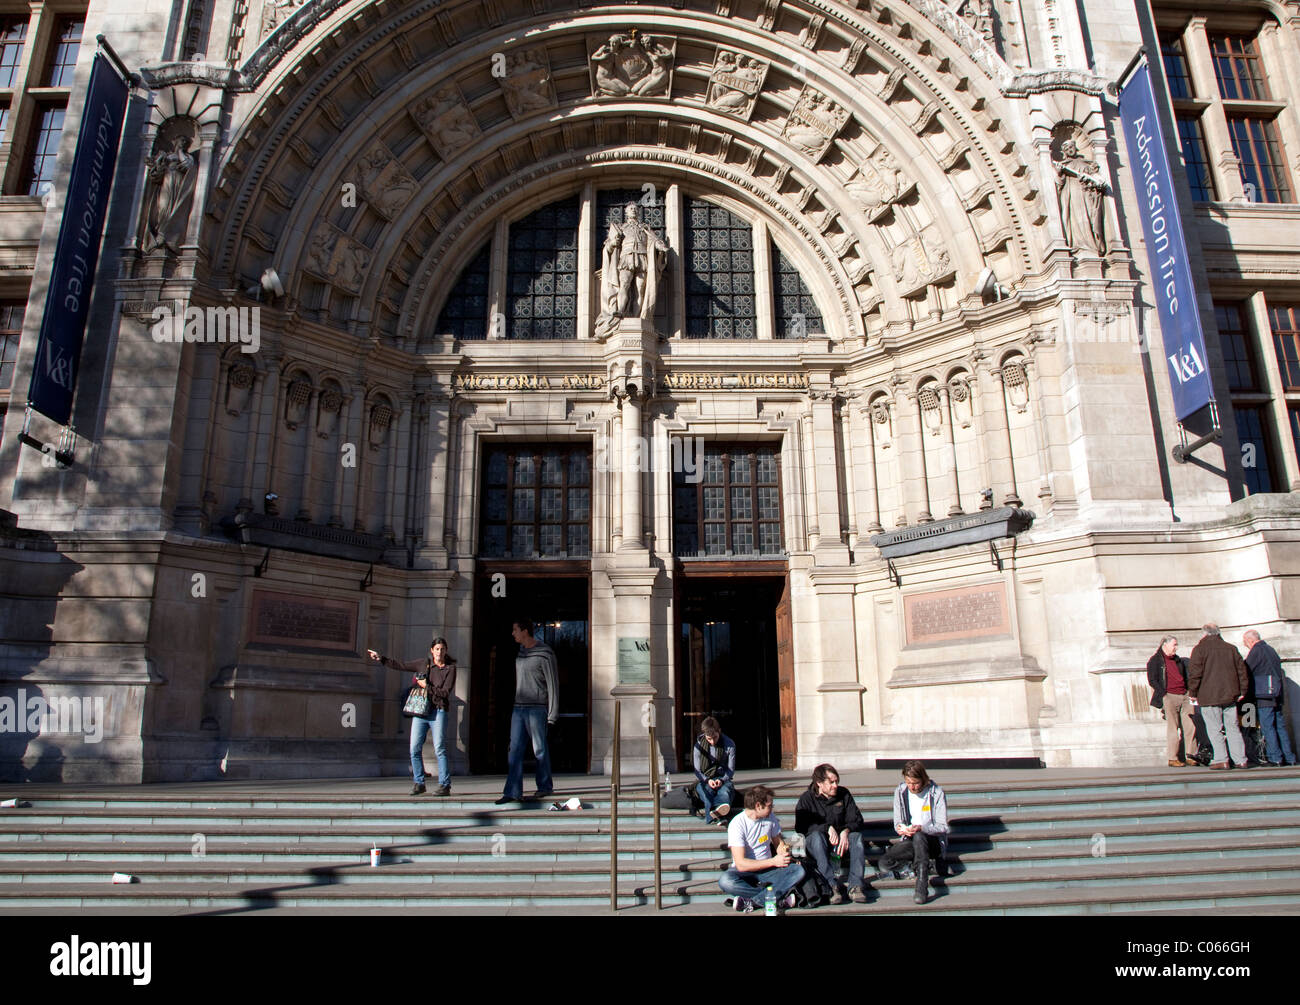 Main entrance to Victoria & Albert Museum, London Stock Photo